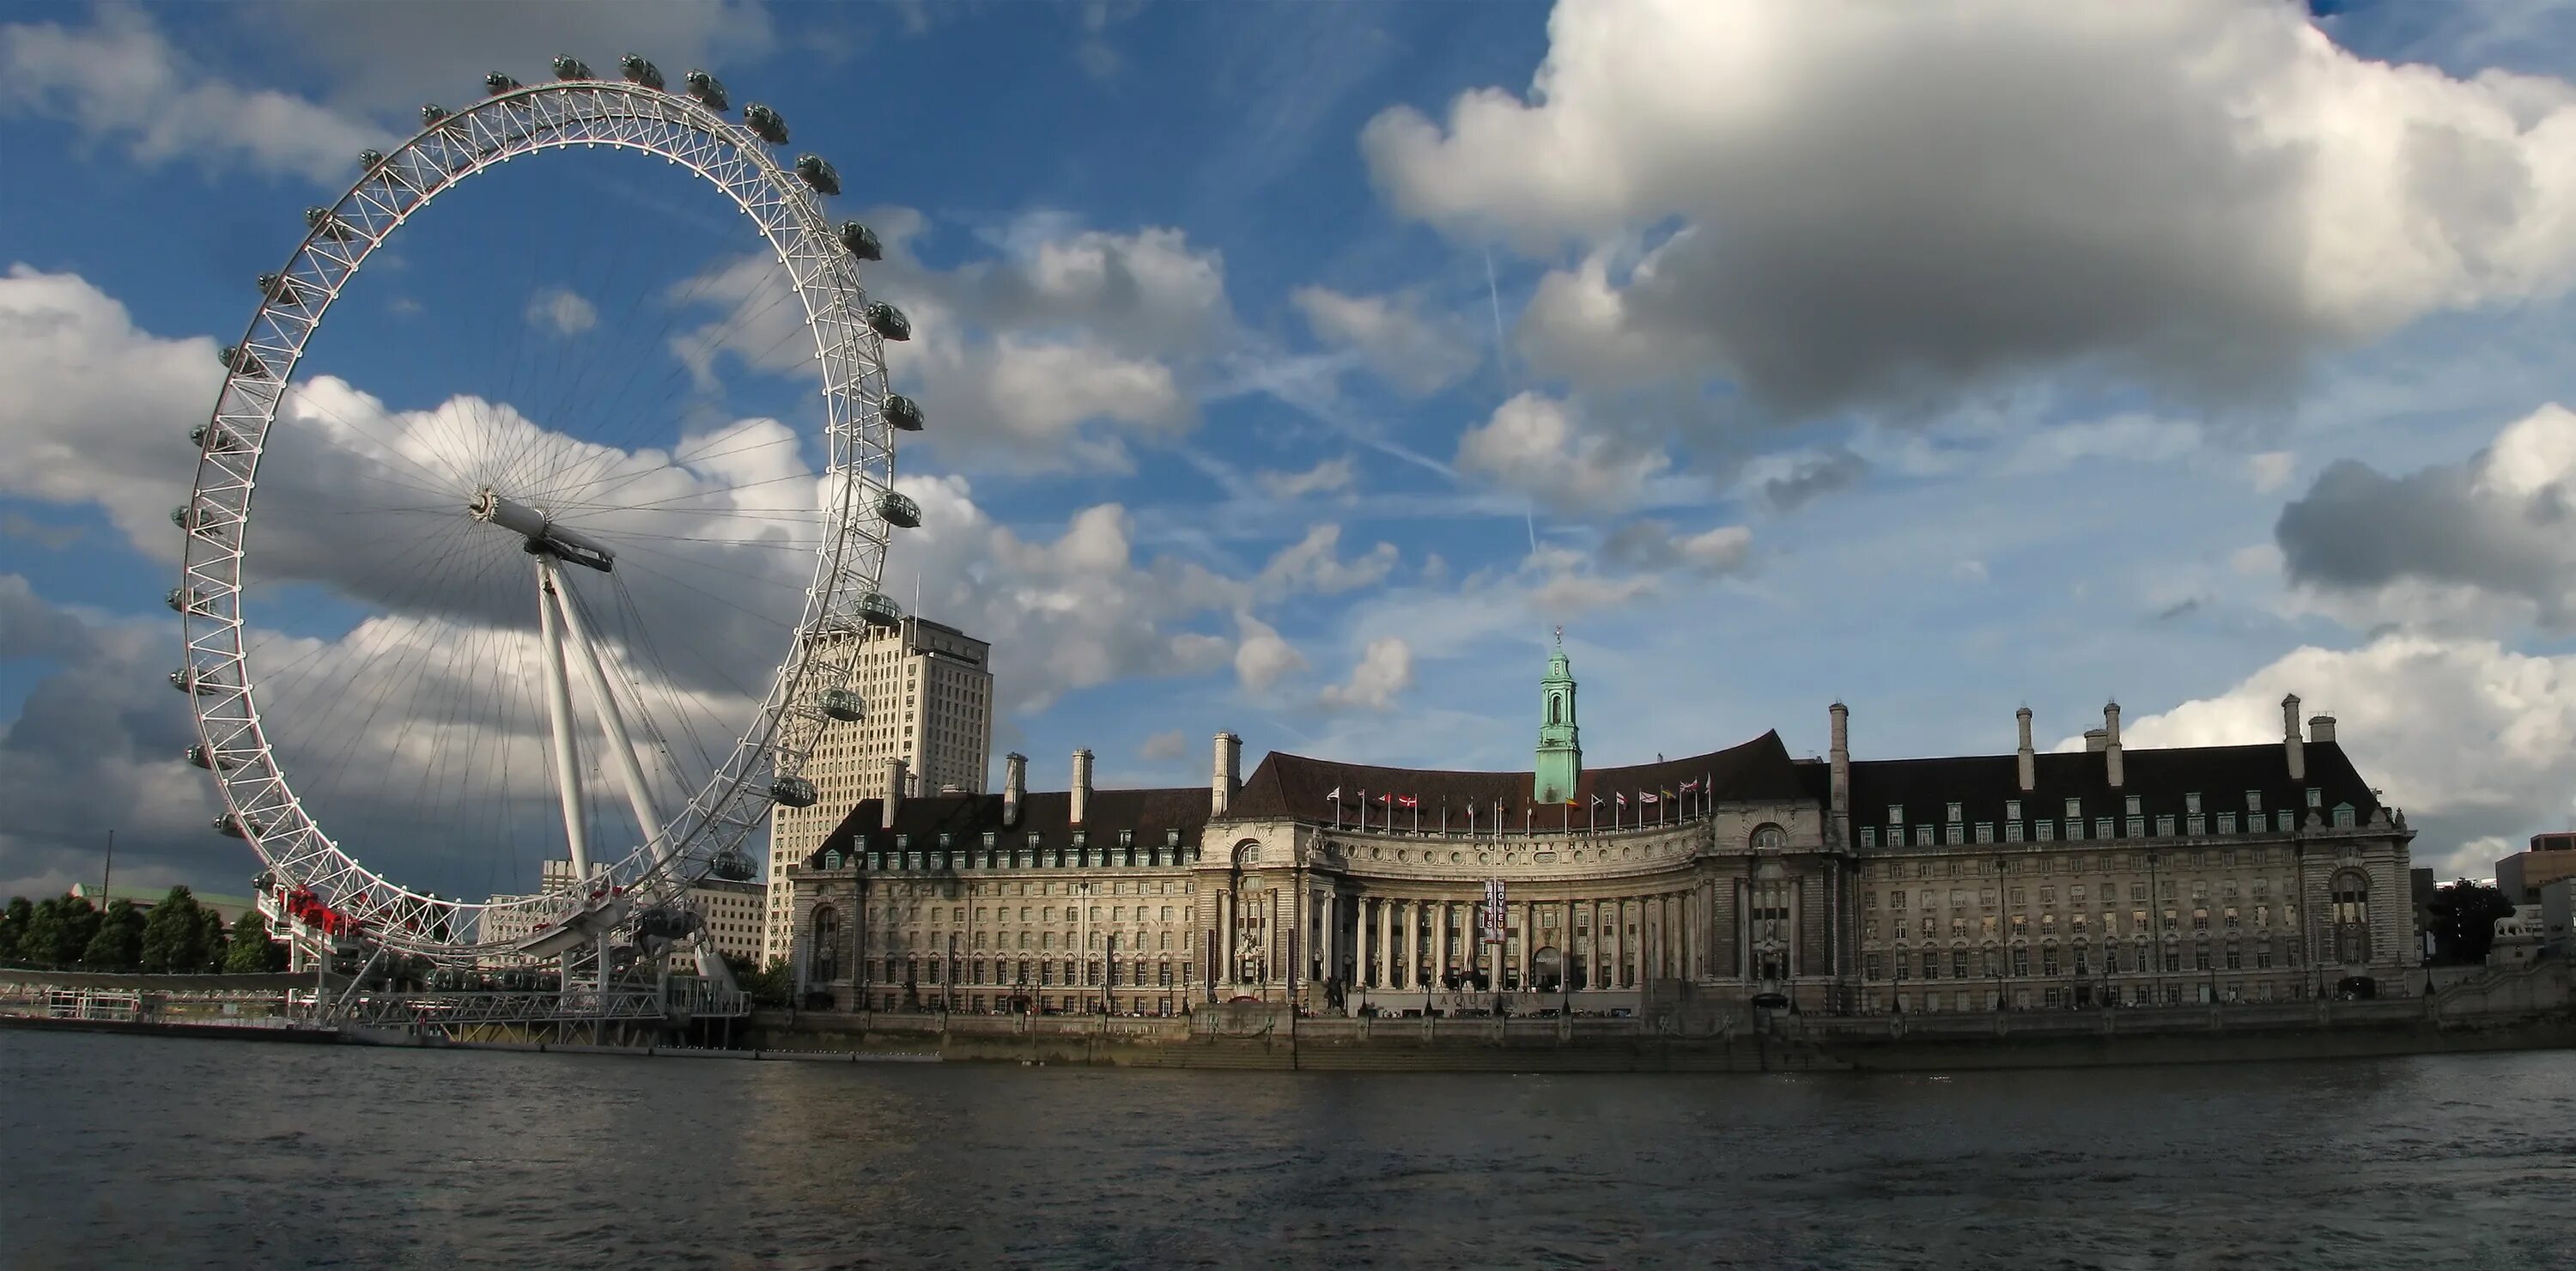 Сторона лондона. Луишем (Боро Лондона). Панорама Лондона Лондонский глаз. Лондонский глаз панорама. Достопримечательности Лондона панорама.